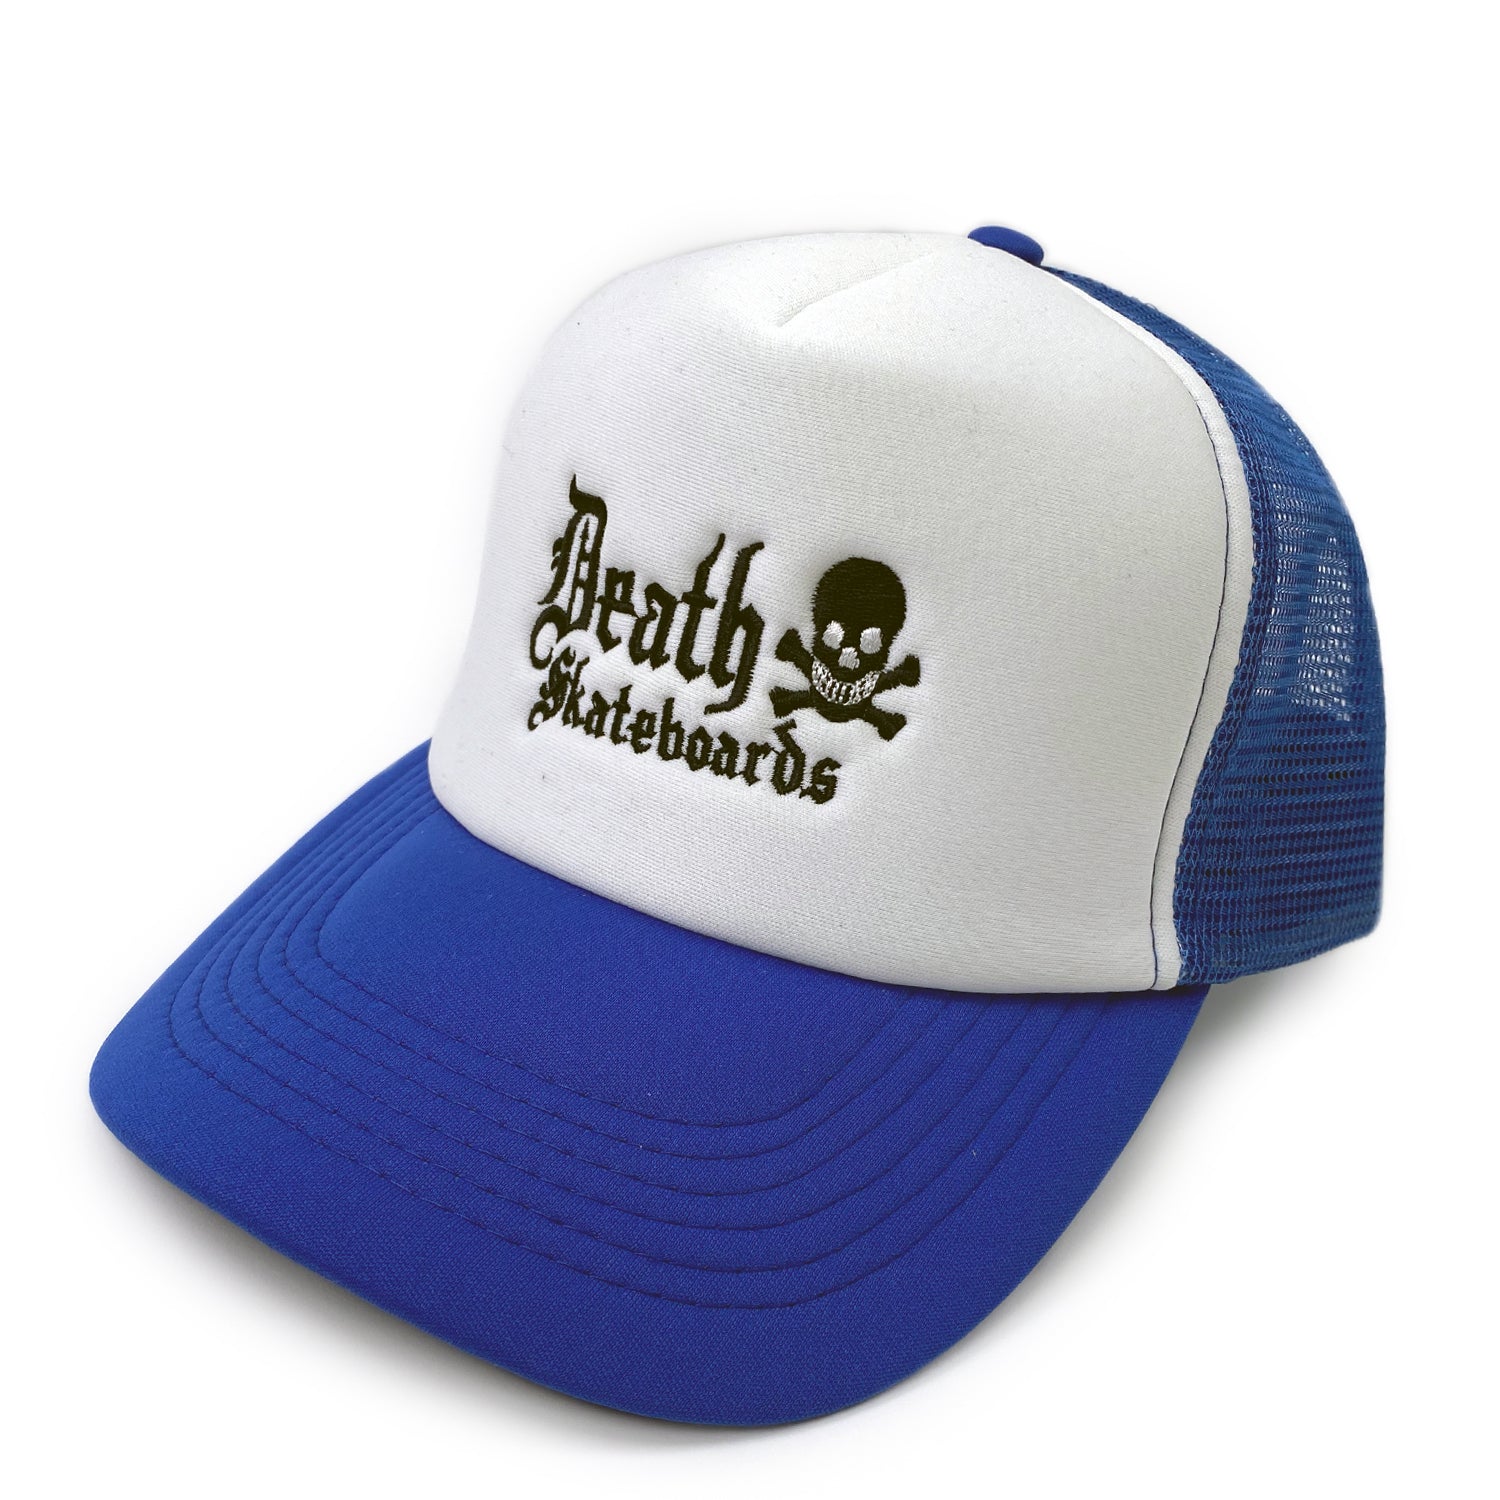 Death Skateboards Mesh Trucker Cap - Blue / White - Prime Delux Store